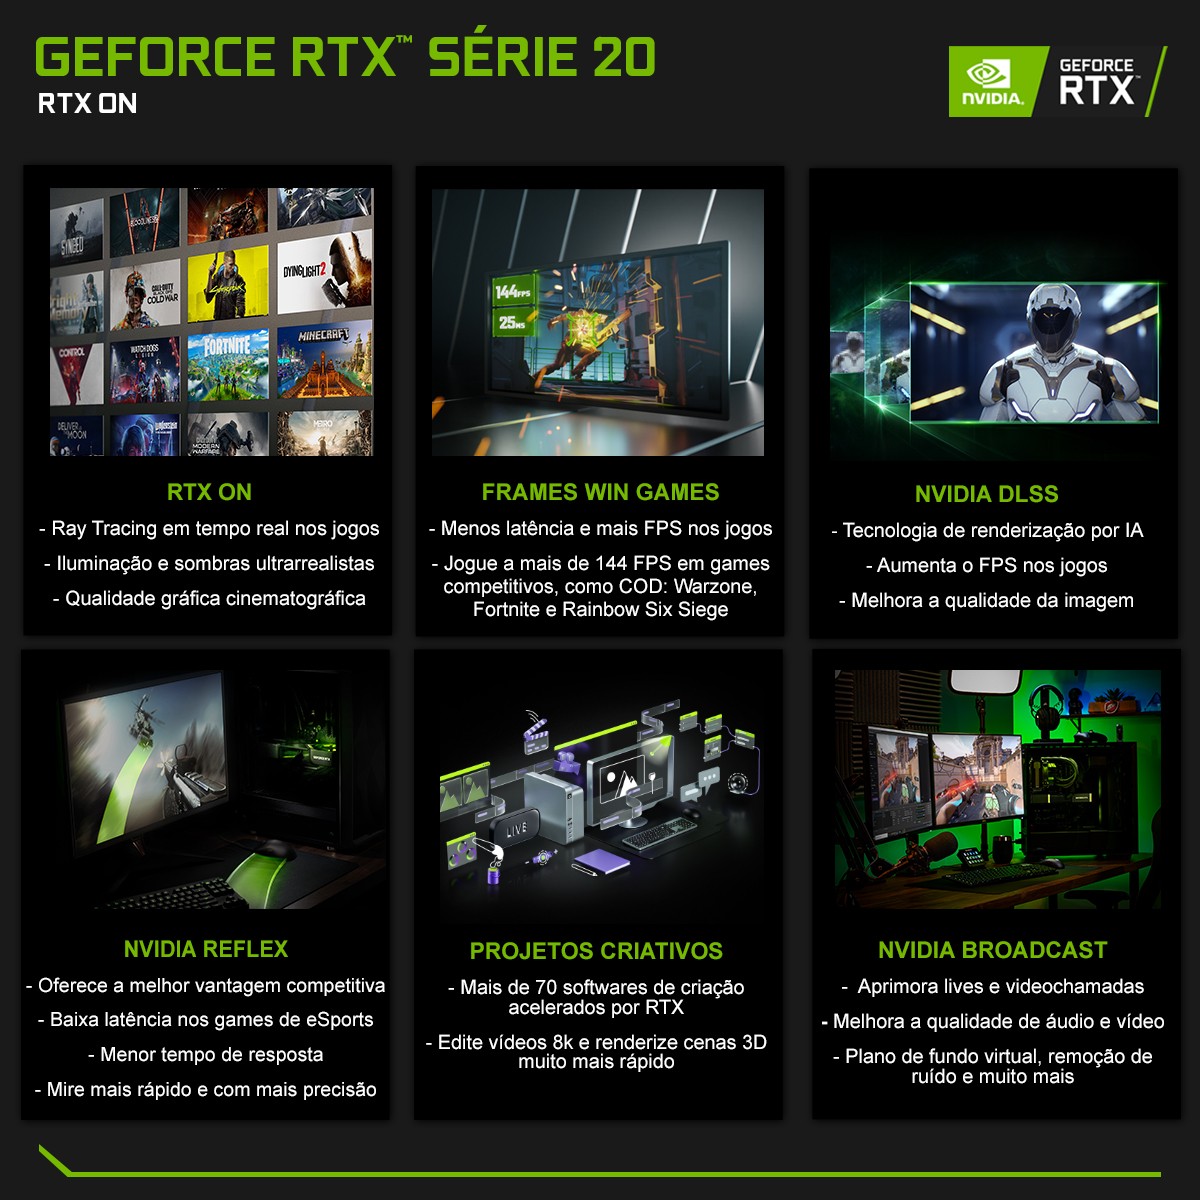 Placa de Vídeo Galax GeForce RTX 2060 Super (1-Click OC), 8GB GDDR6, 256Bit, 26ISL6HP39SS